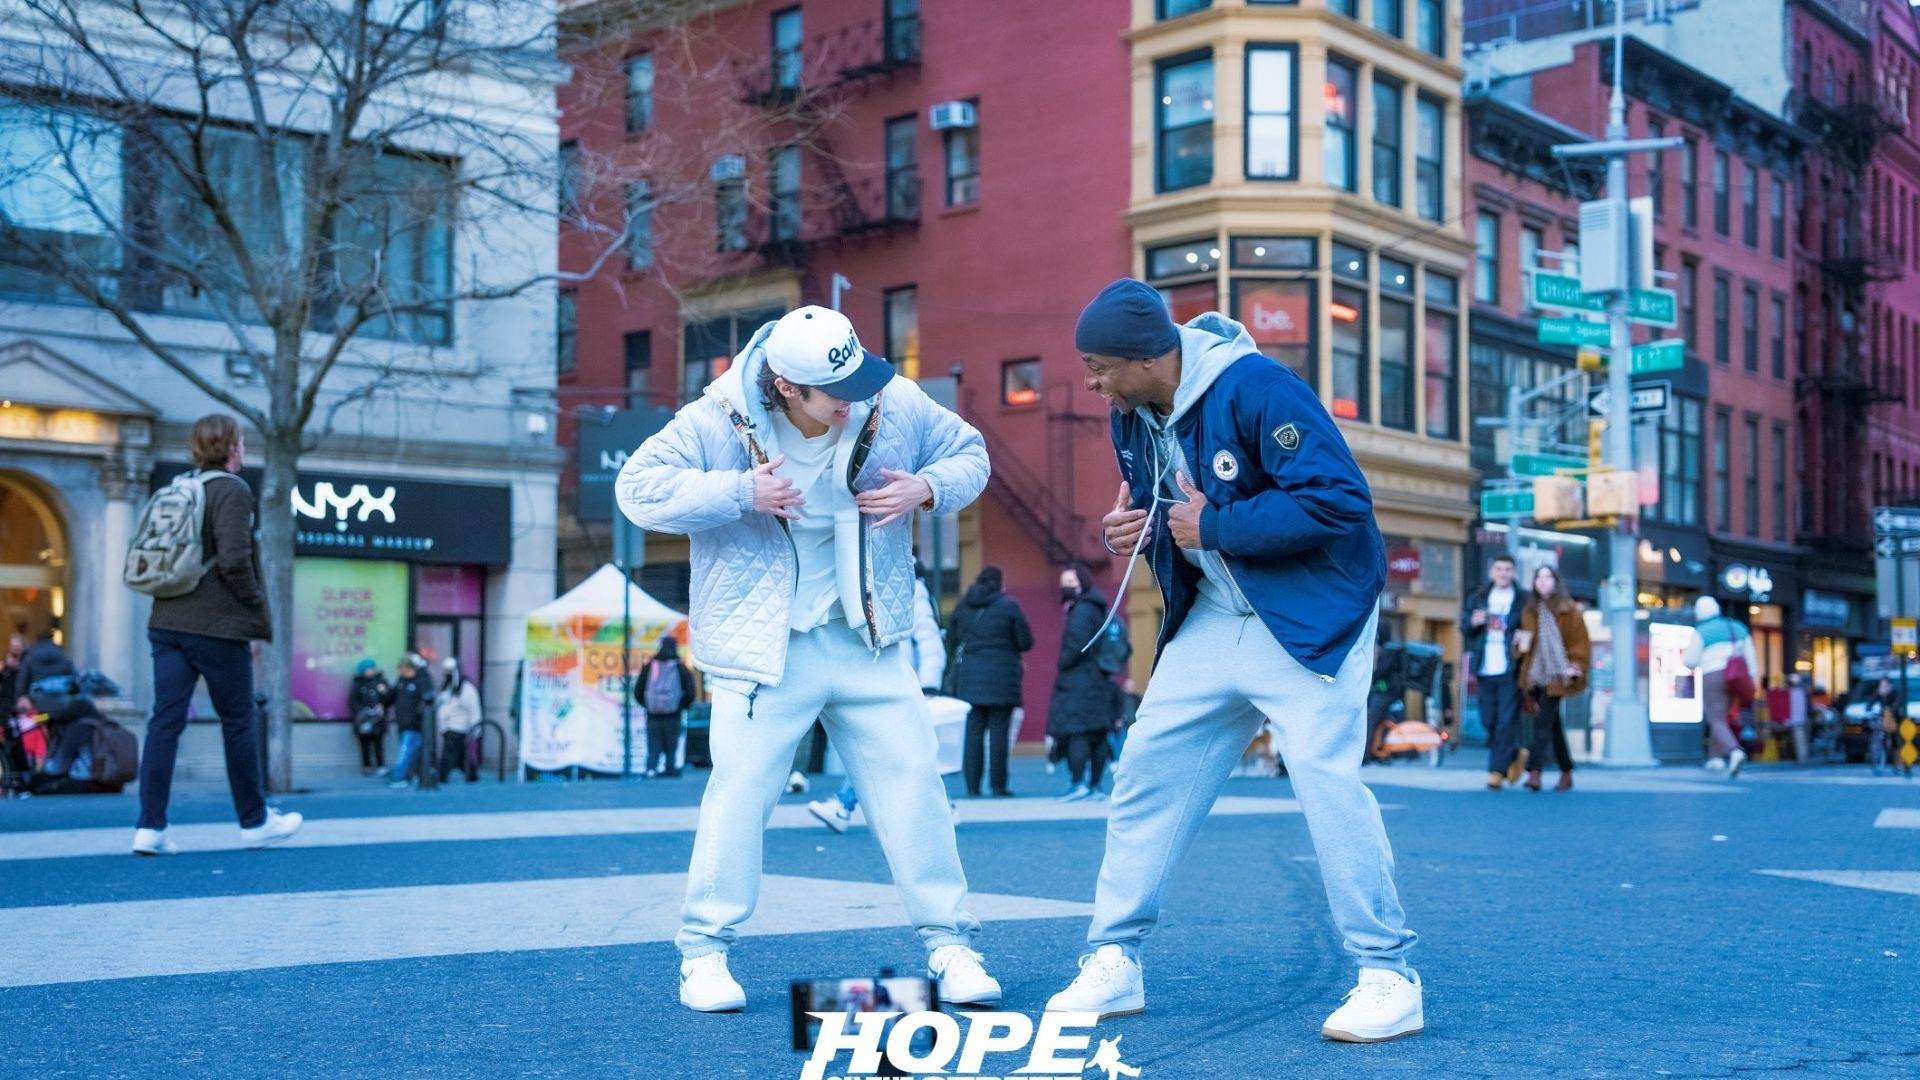 EP5 HOPE ON THE STREET DOCUSERIES